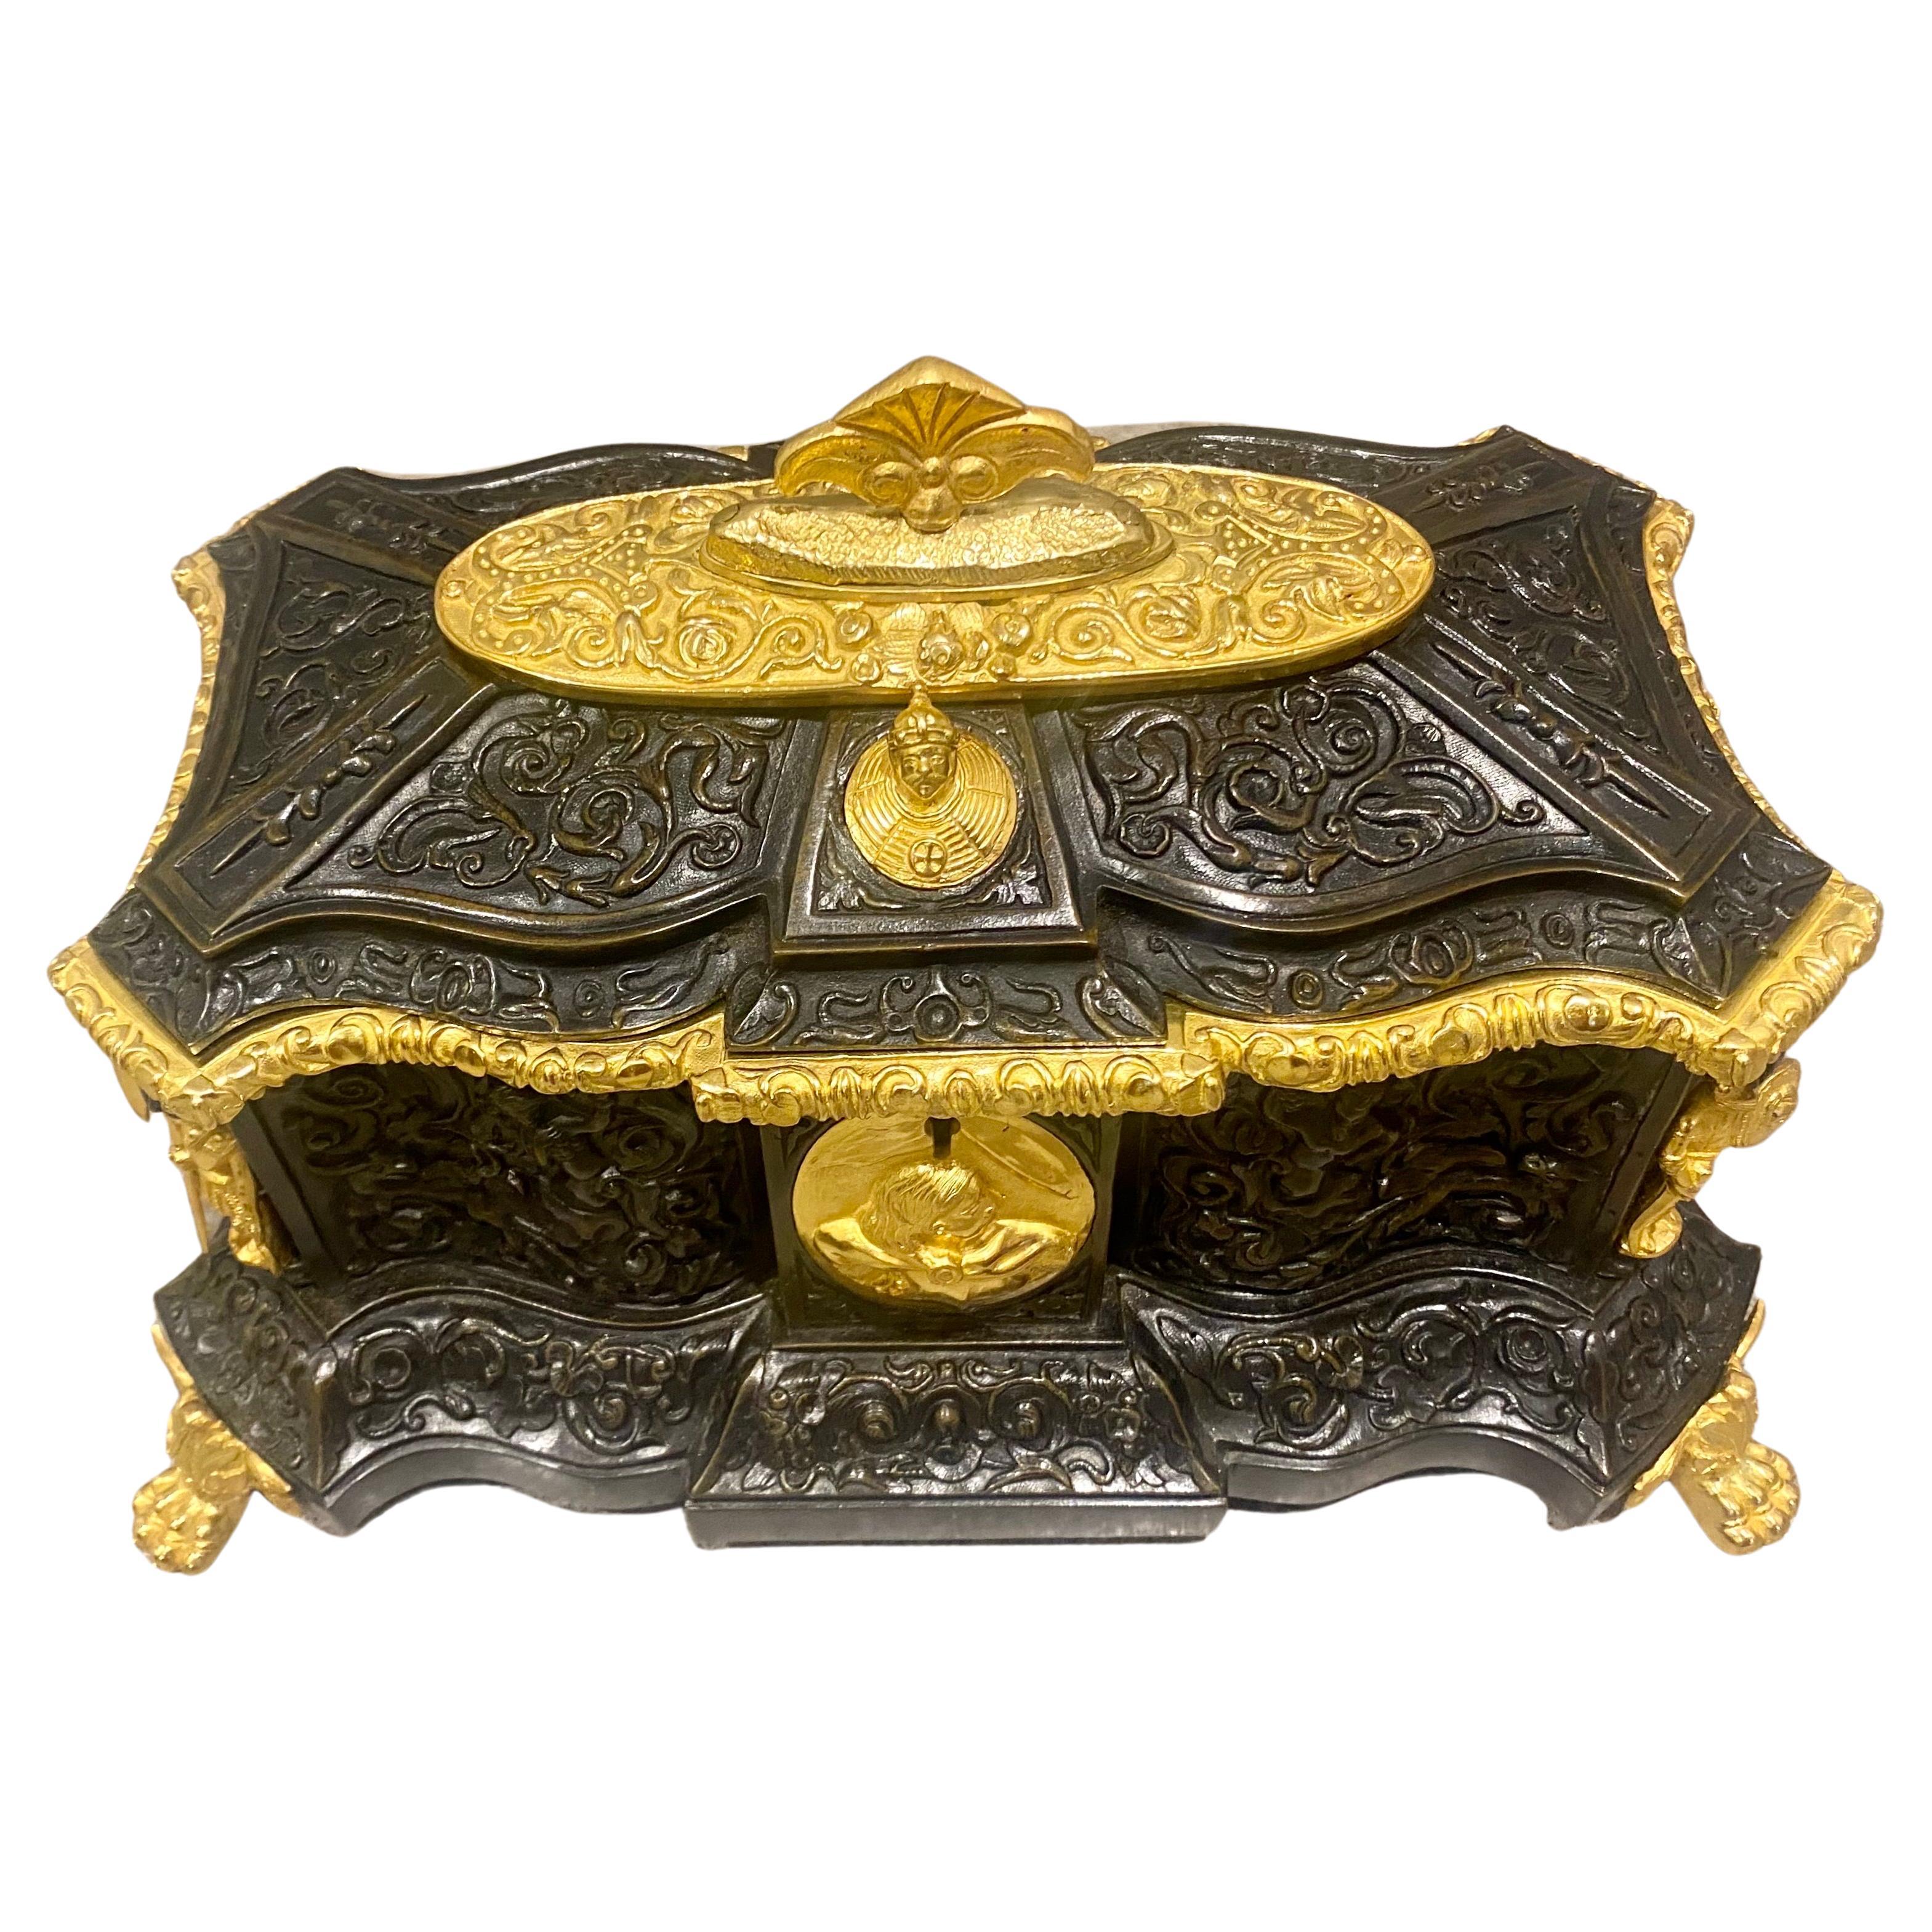 A Large Impressive 19th Century Bronze Jewelry Casket Box. Circa 1860 For Sale 2